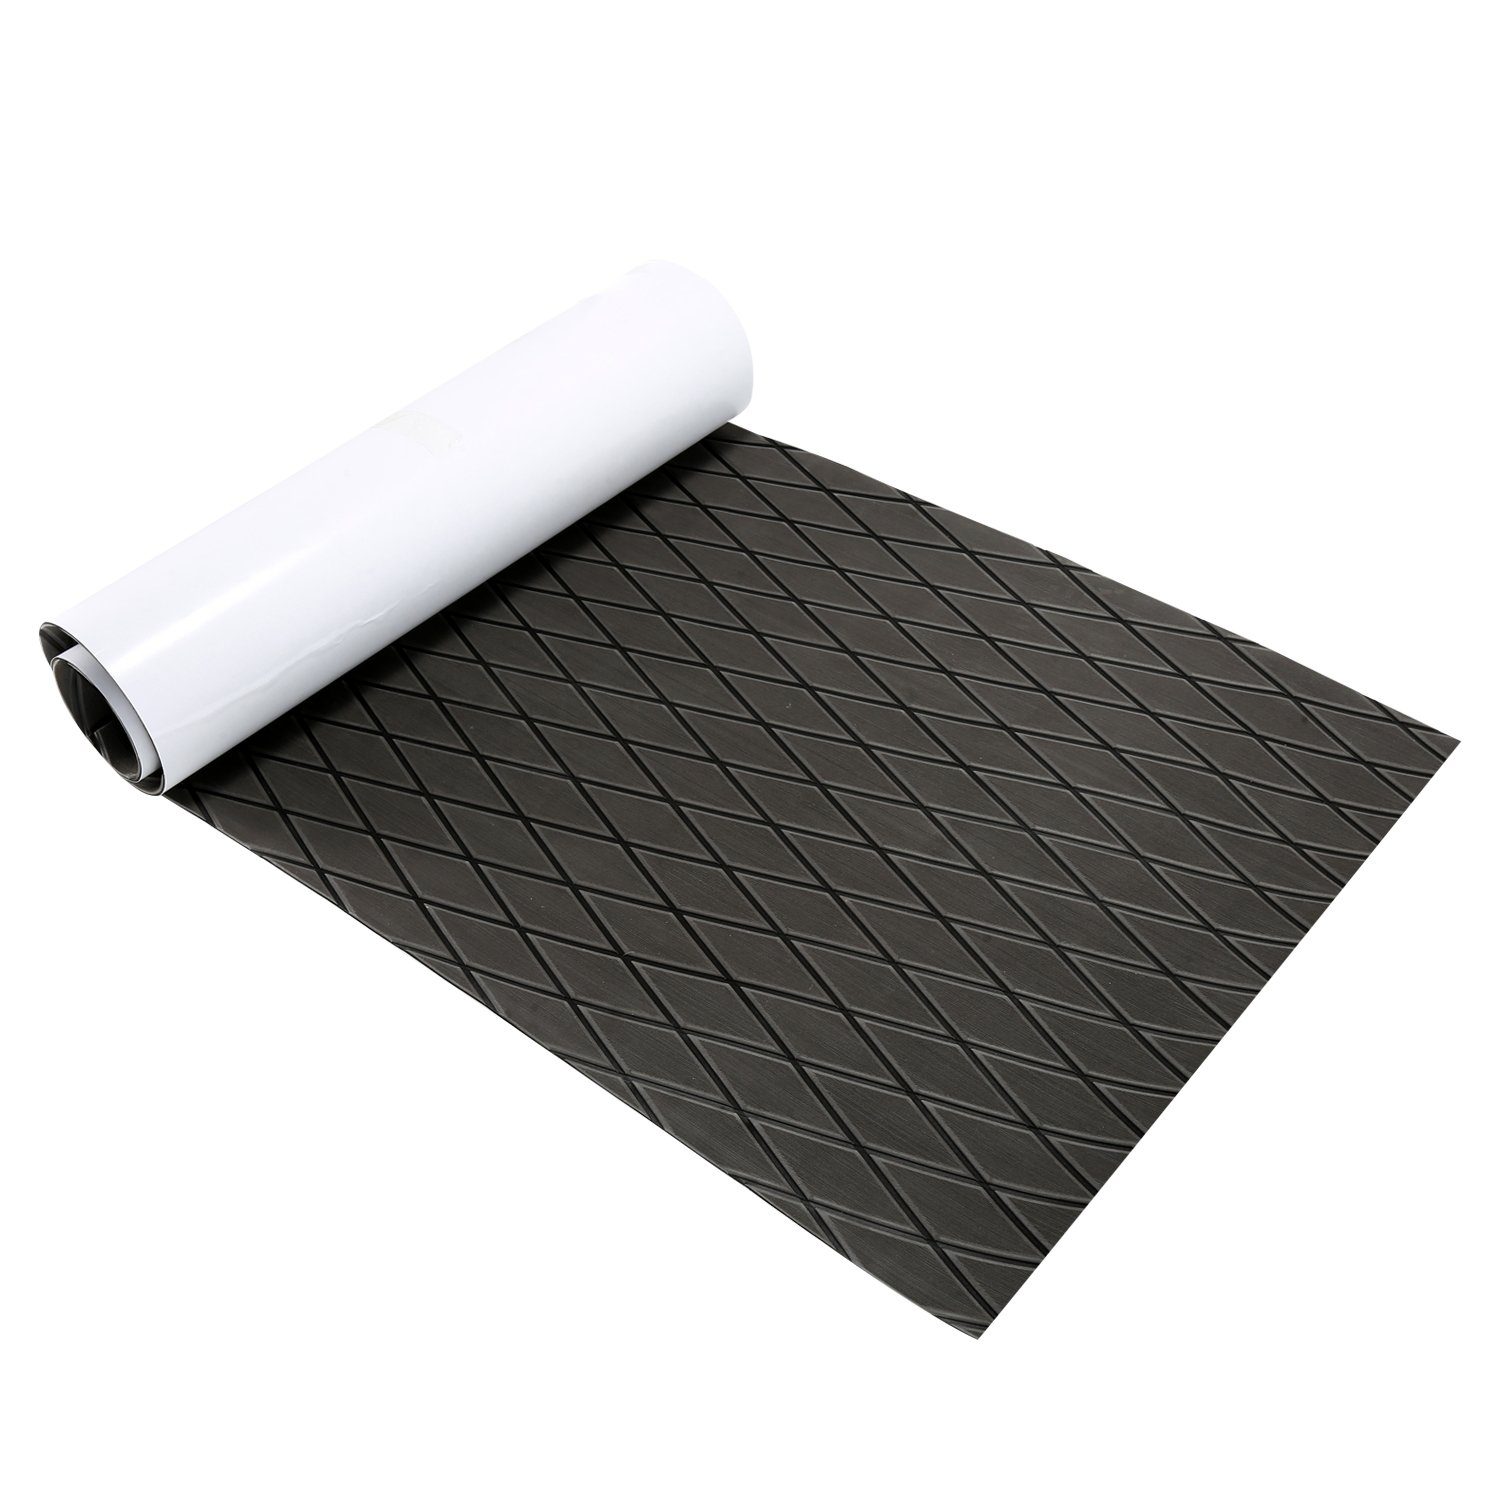 Teppich EVA Bodenbelag Bodenmatte Gimisgu Anti-Rutsch Matte Deck Bodenmatte Schaum Teak